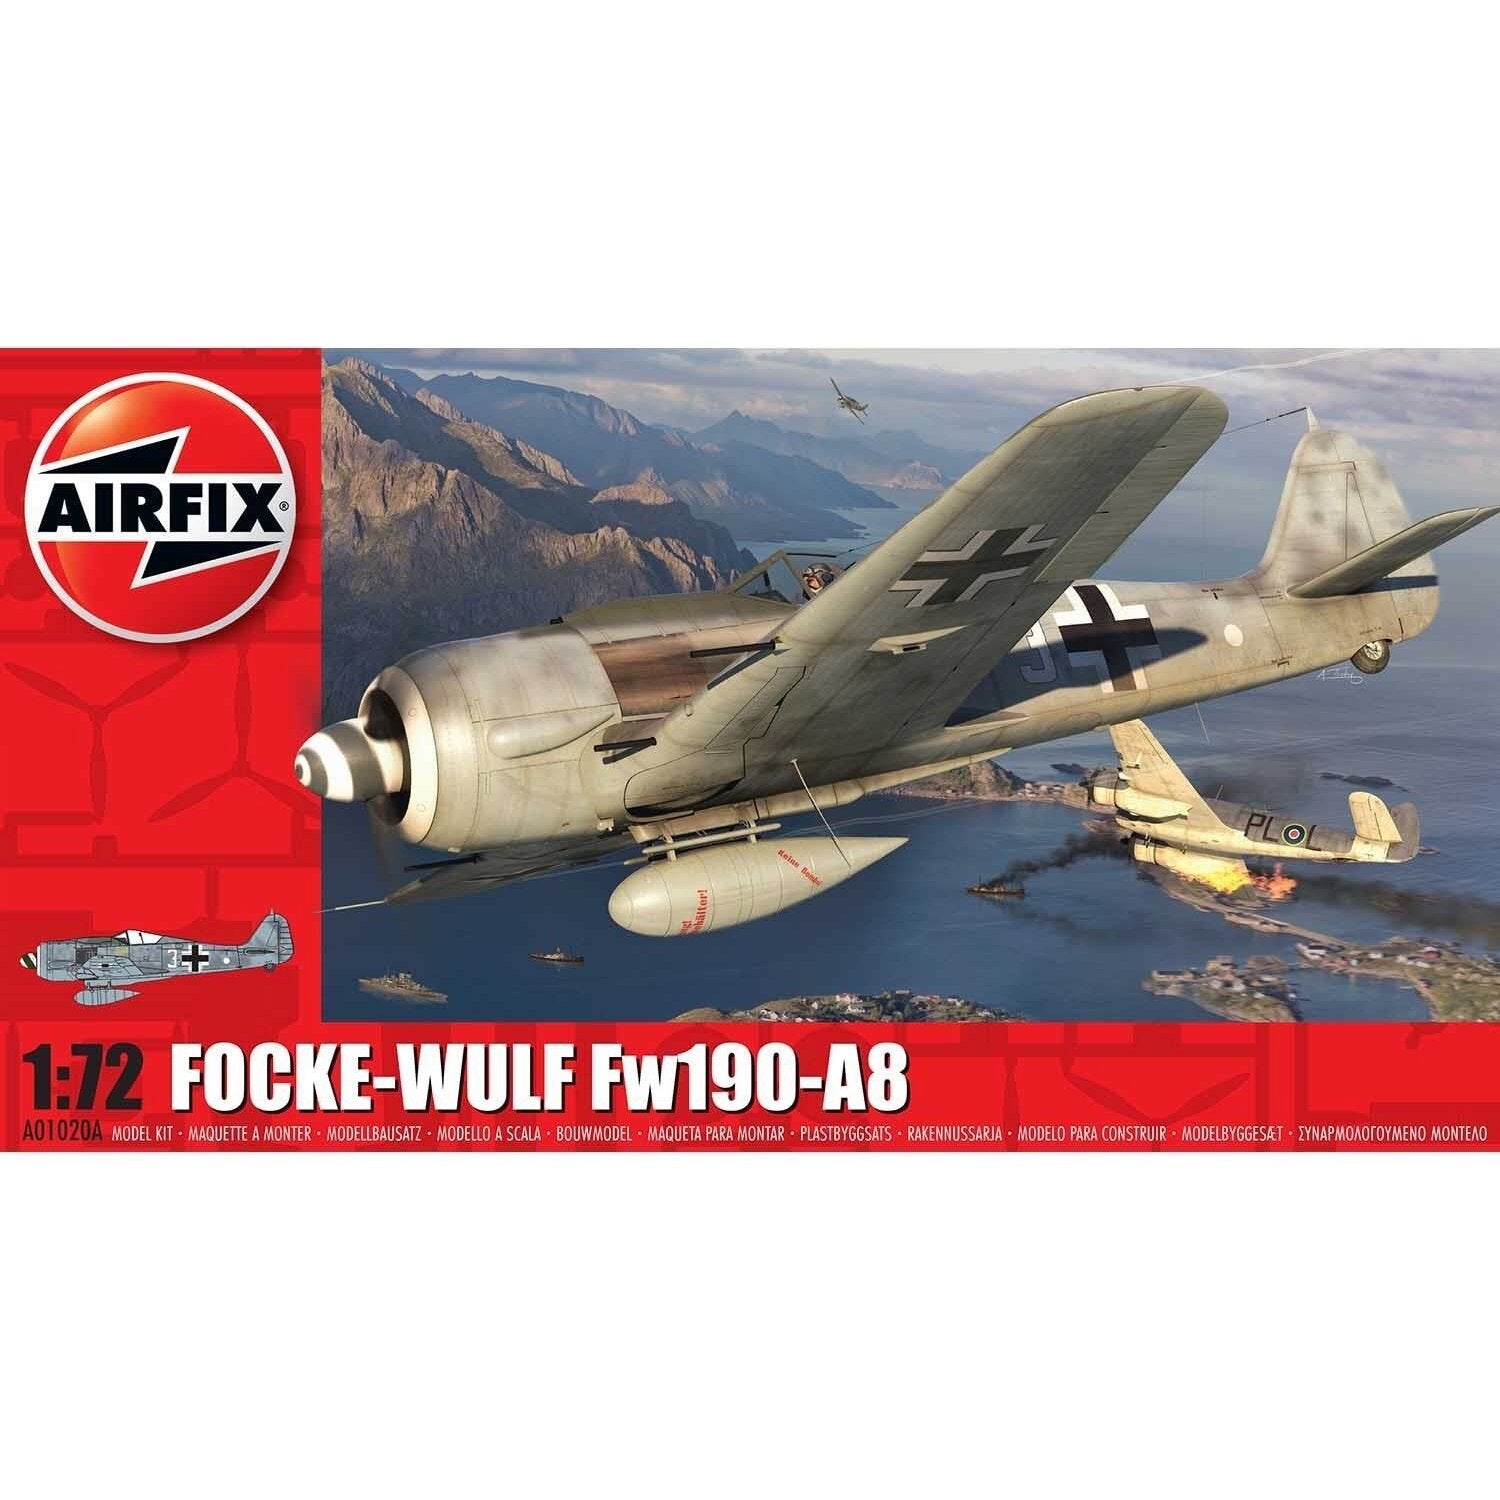 Airfix - 1/:72 -1020A - Focke_Wulf Fw190-A8-Yarrawonga Fun and Games.